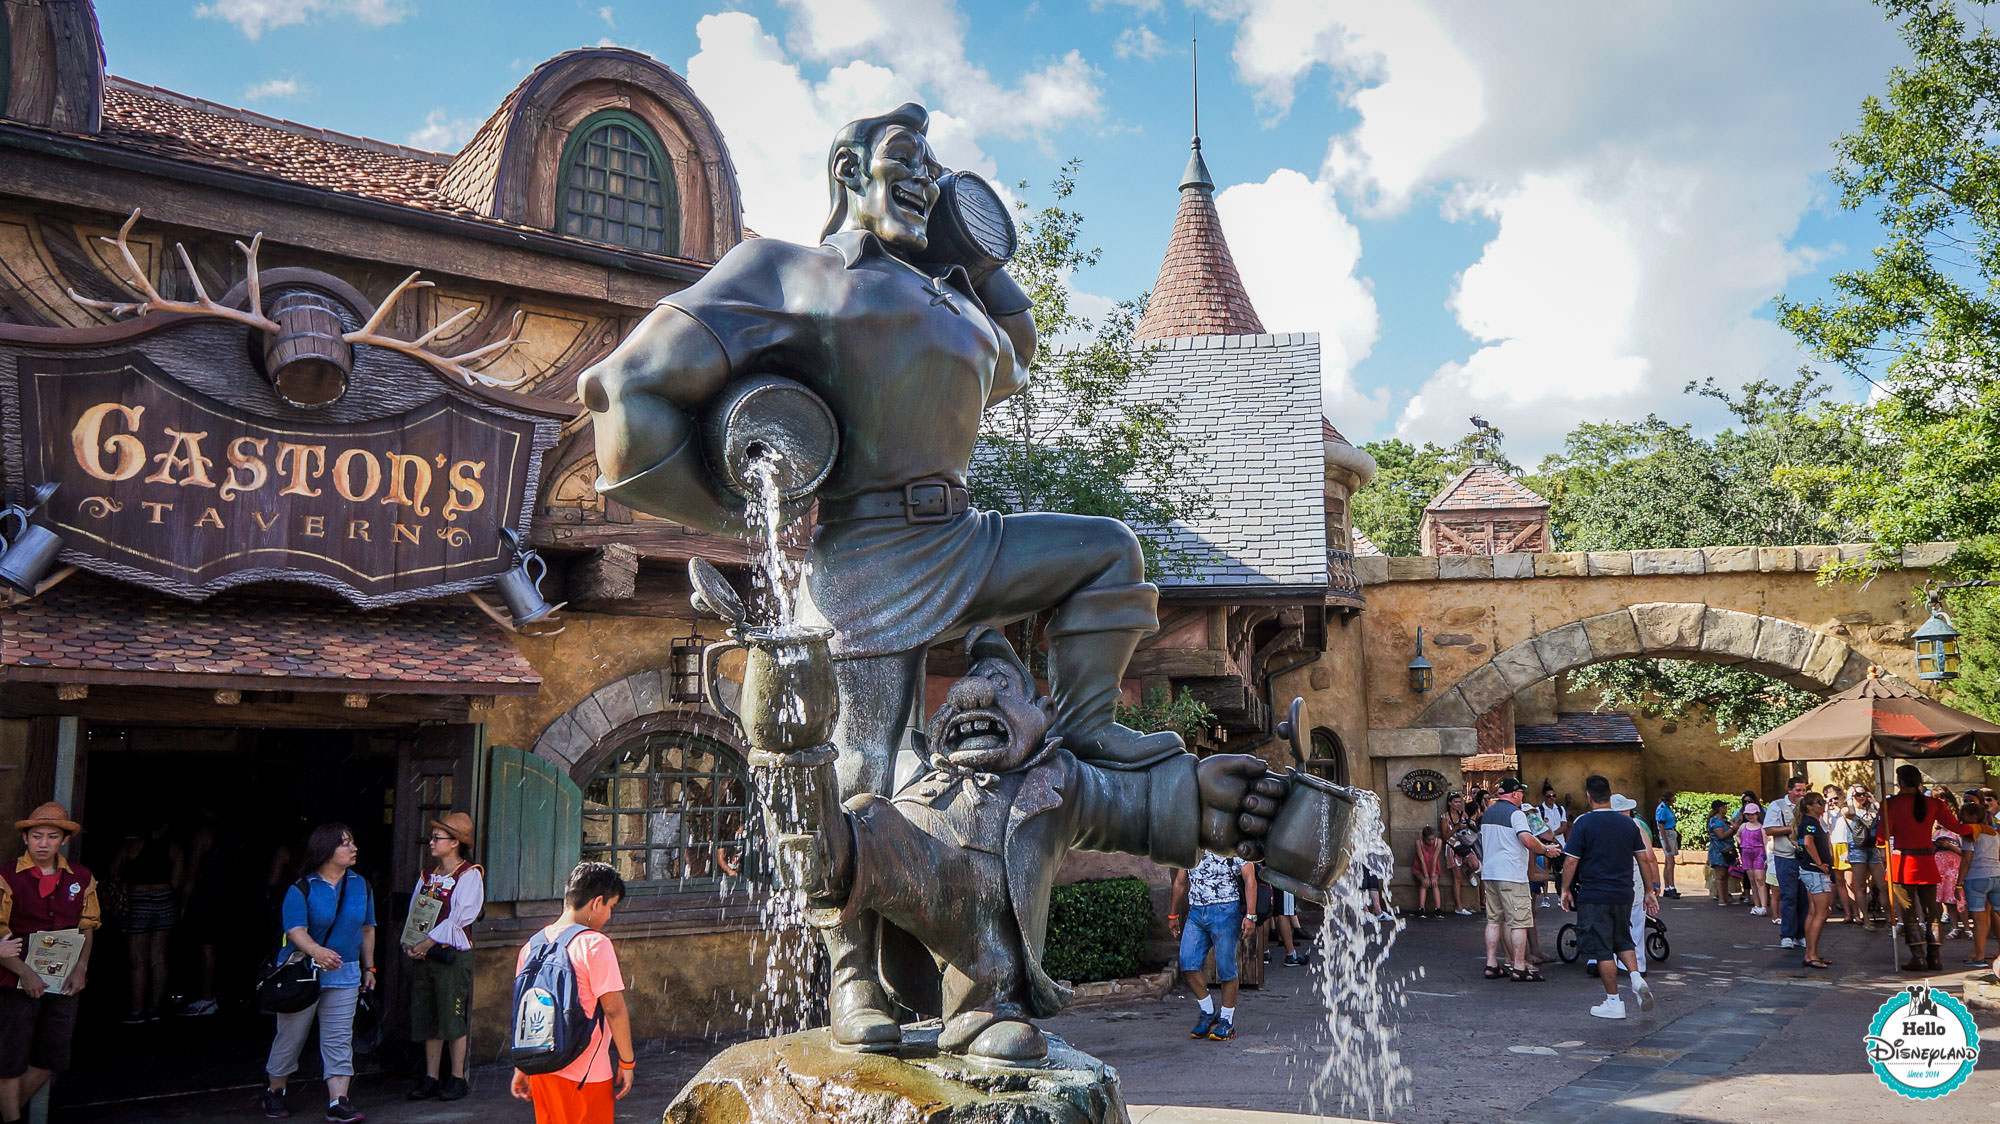 Magic Kingdom - Walt Disney World